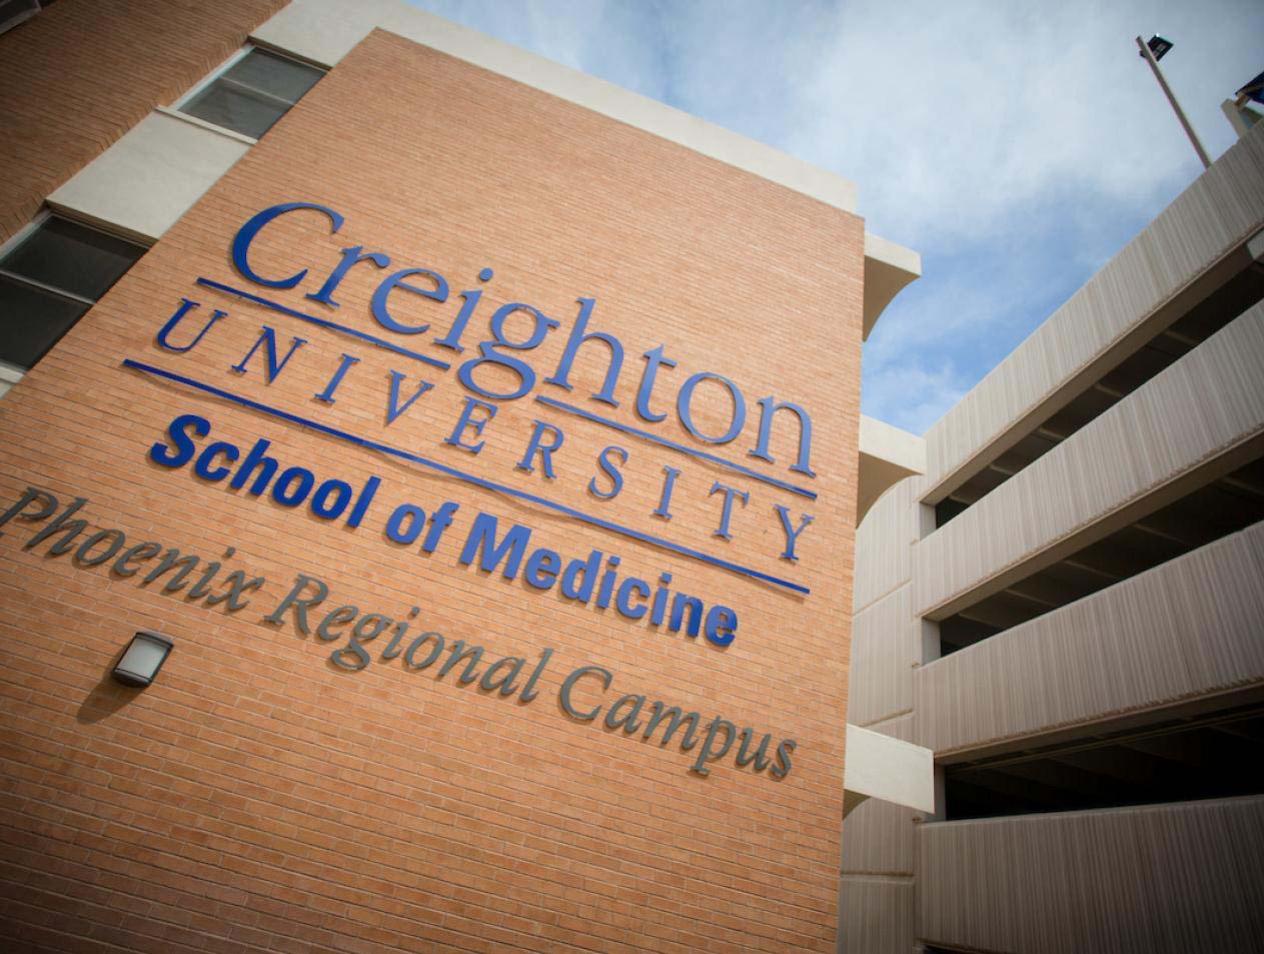 Creighton University School of Medicine Phoenix Regional Campus building